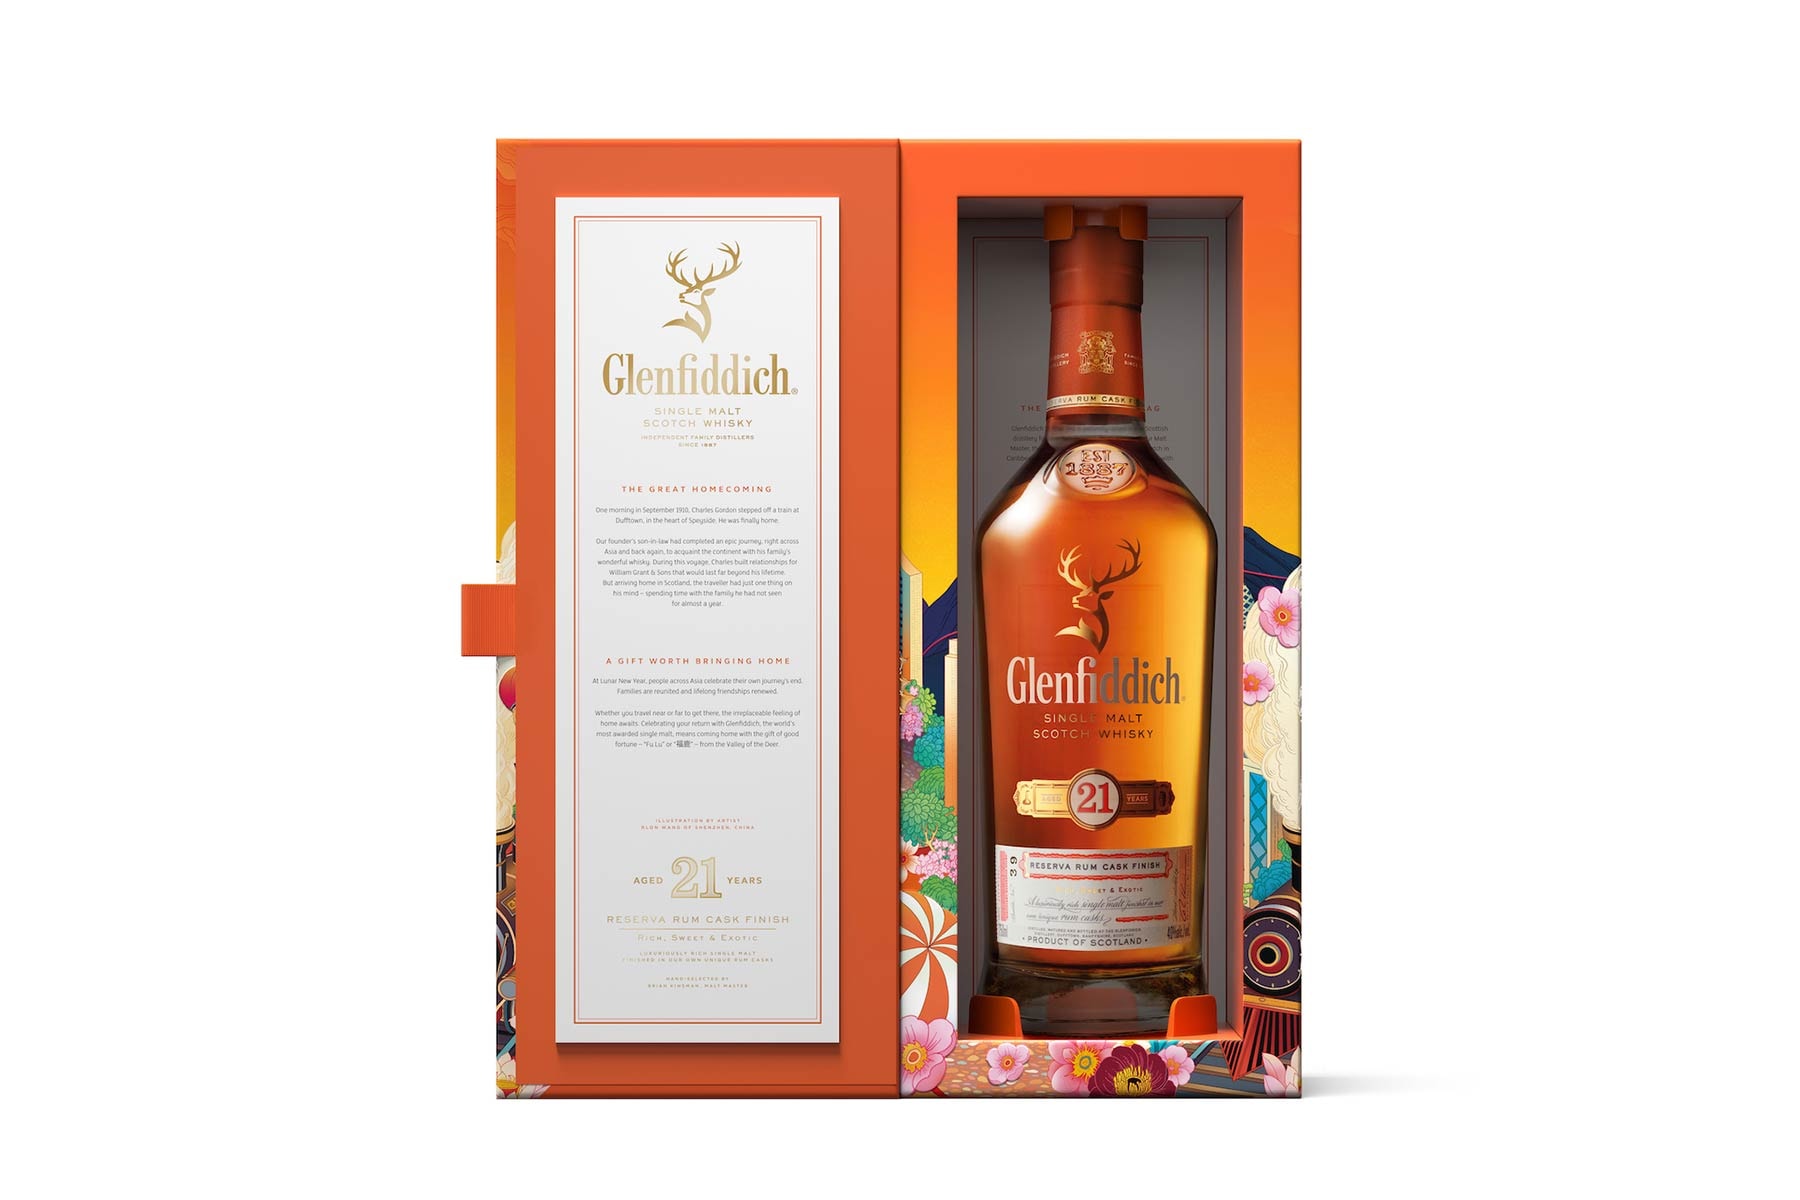 Glenfiddich Rlon Wang The Royal Stag Homecoming 21 Single Malt Scotch Whisky The Joy of Homecoming